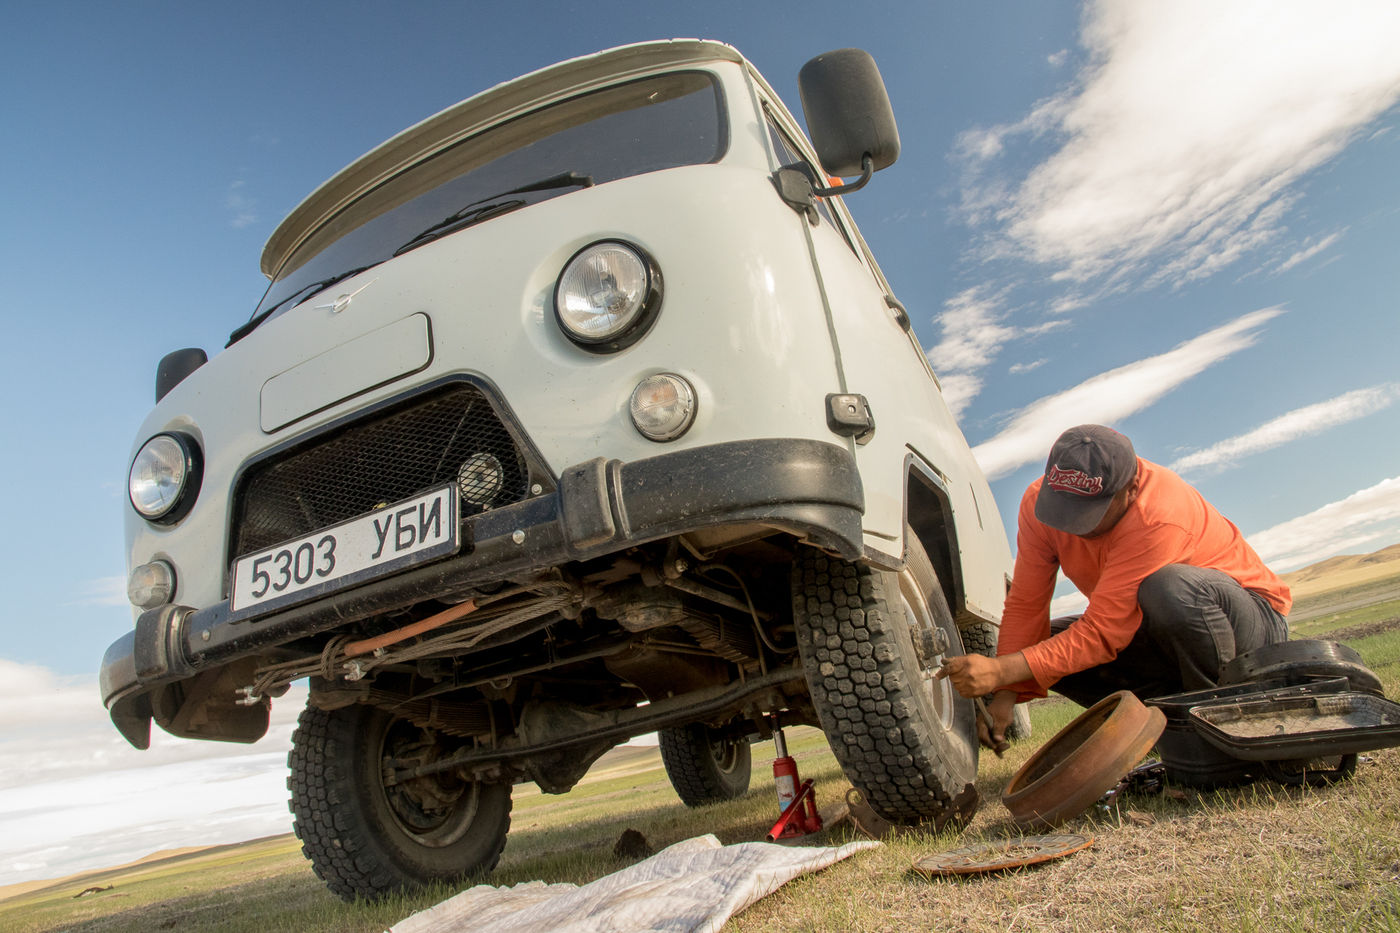 The daily maintenance of our indestructable Ural mini van! © Johannes Jansen